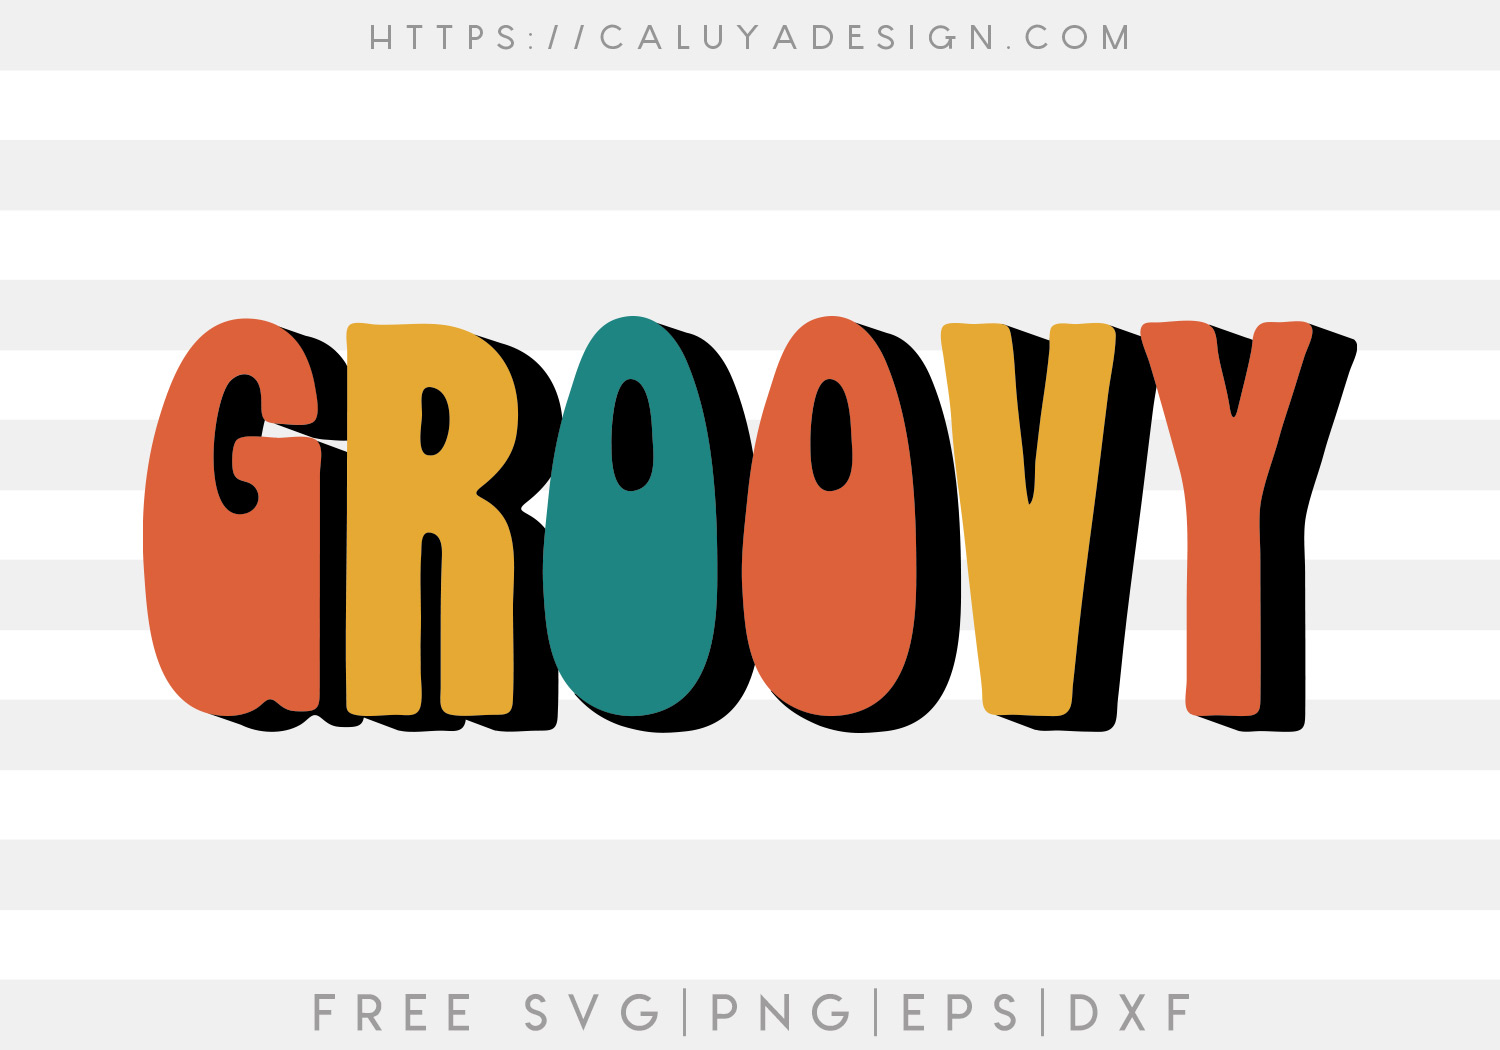 Download Free Goovy SVG - CALULYA DESIGN